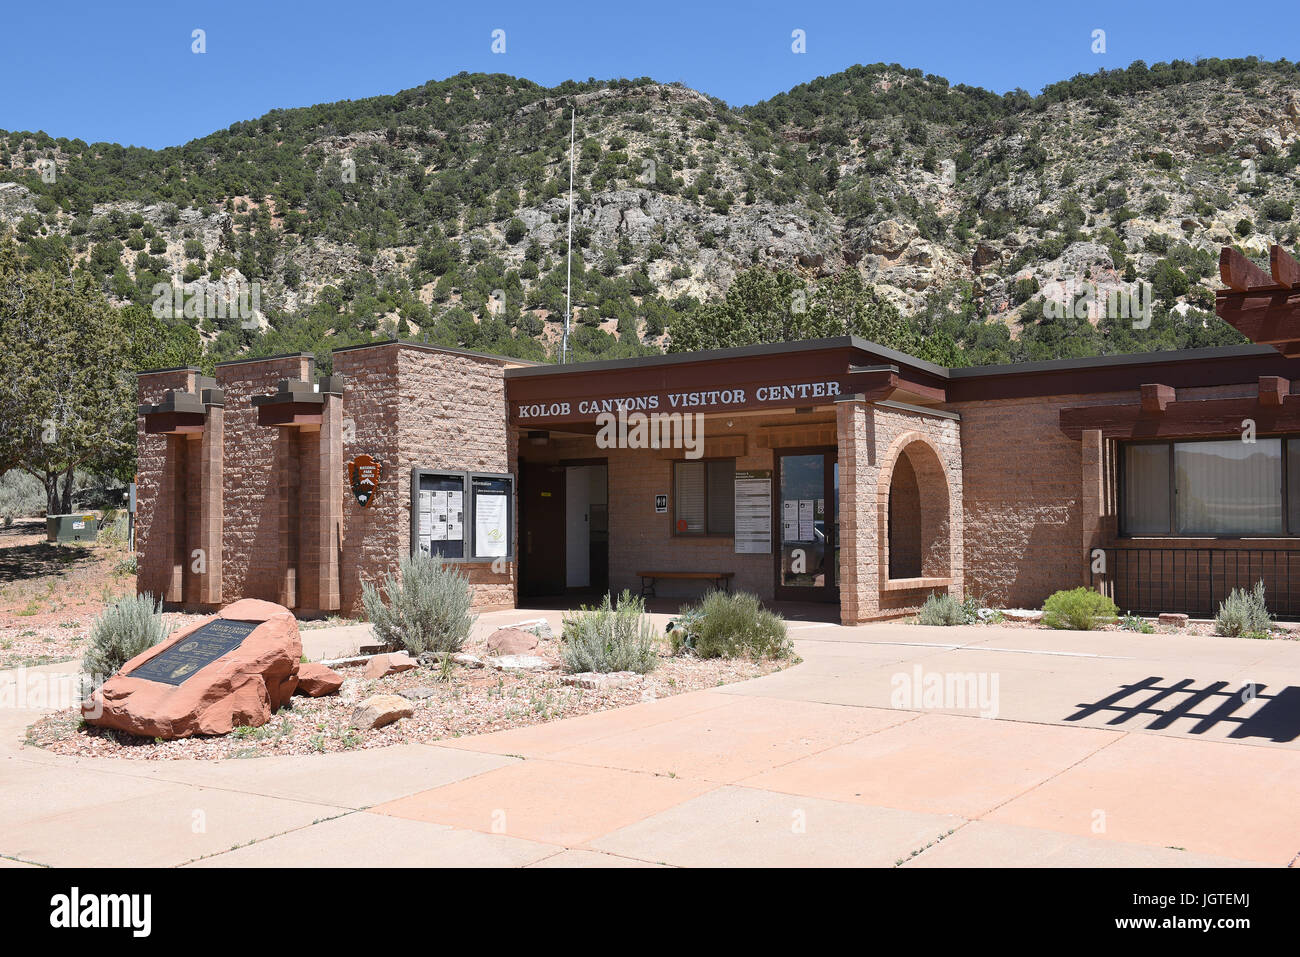 KOLOB CANYONS, SION, Utah - Giugno 29, 2017: Kolob Canyon Visitor Center. A cinque chilometri lungo Kolob Canyon Road permette ai visitatori di visualizzare il canyon Foto Stock